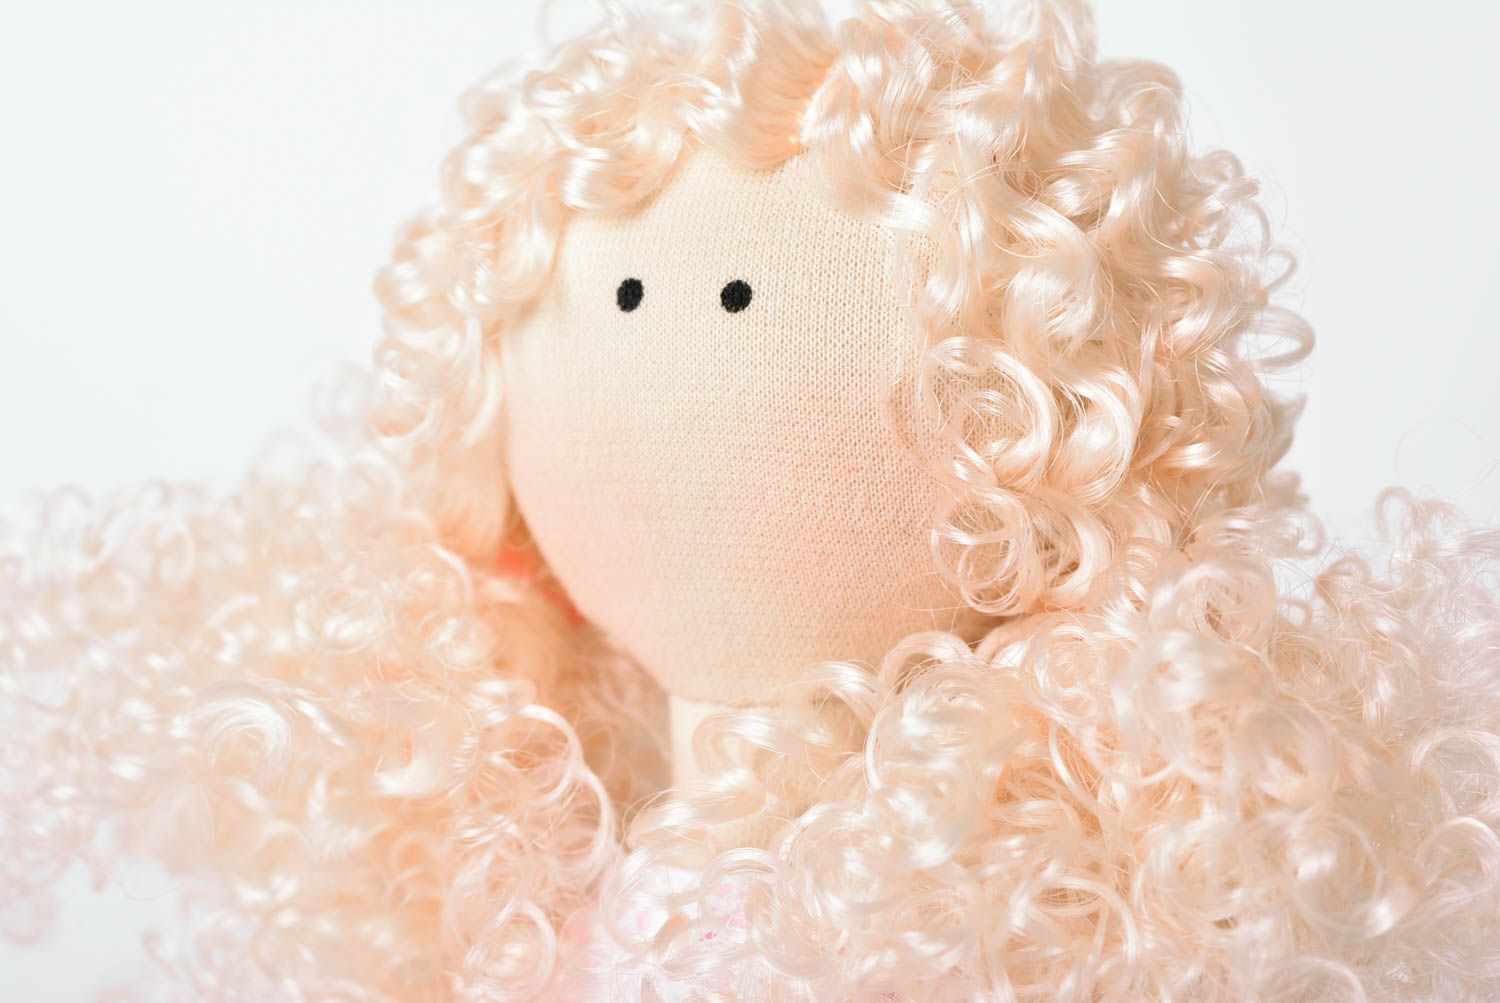 Handmade doll fabric doll designer rag doll interior decor gift ideas photo 3